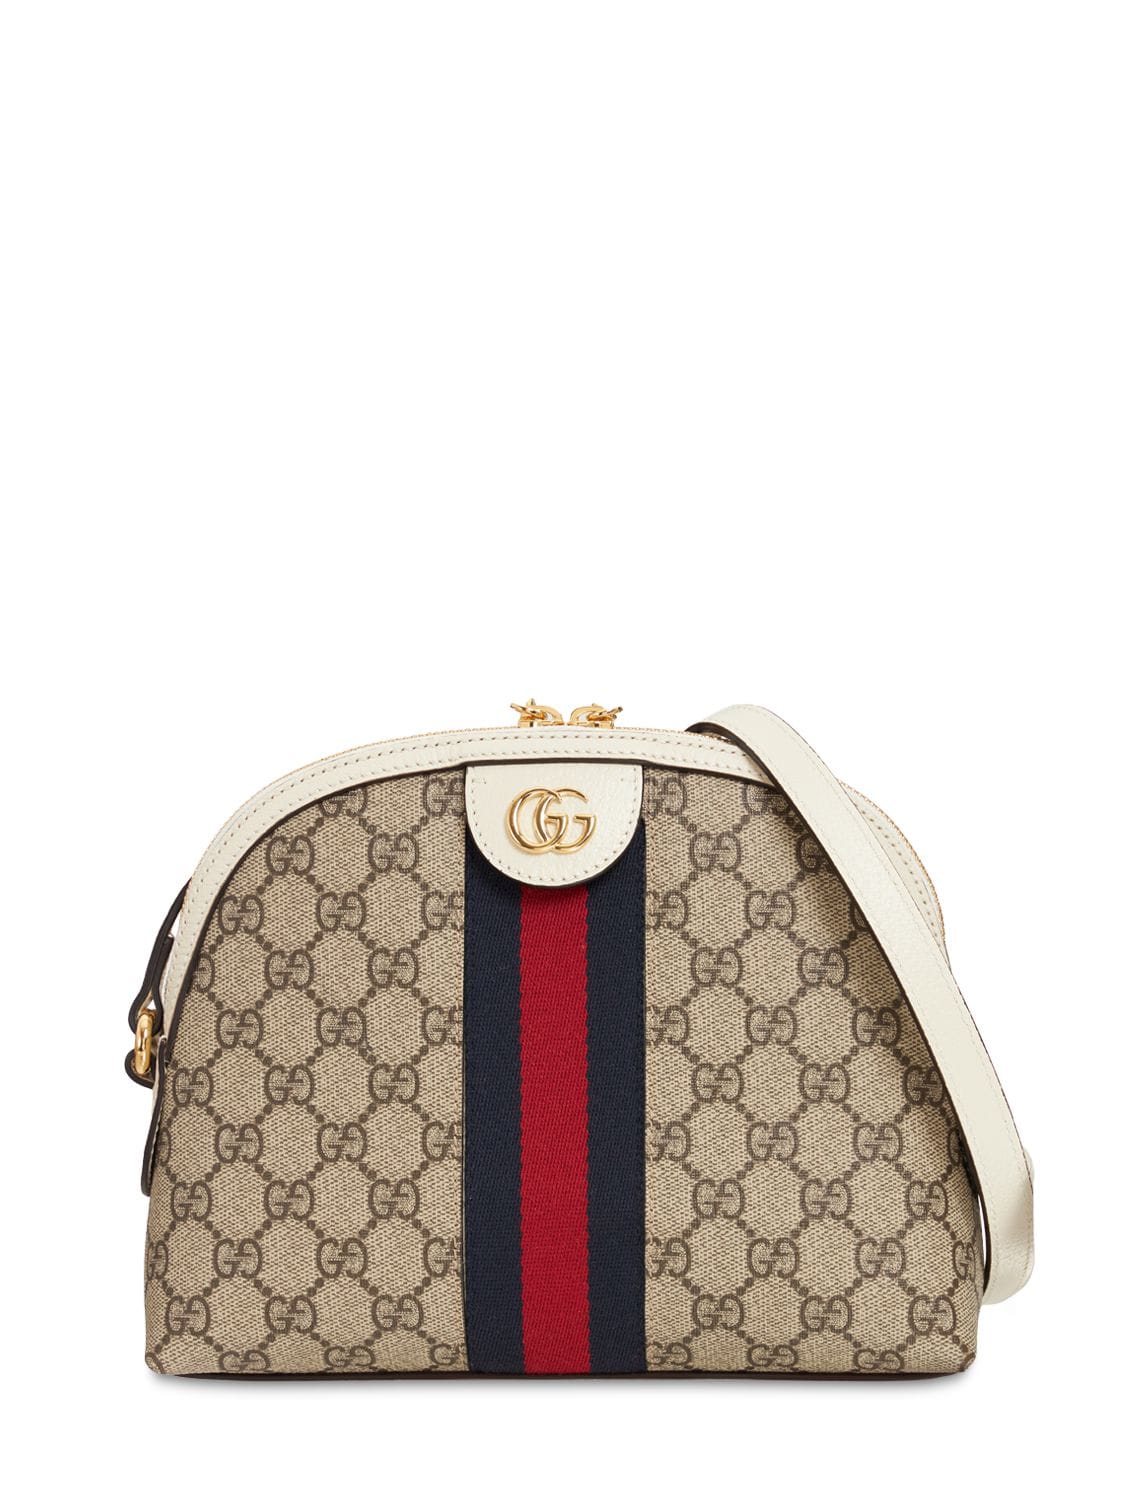 Gucci Women's Shoulder Bags - Cream